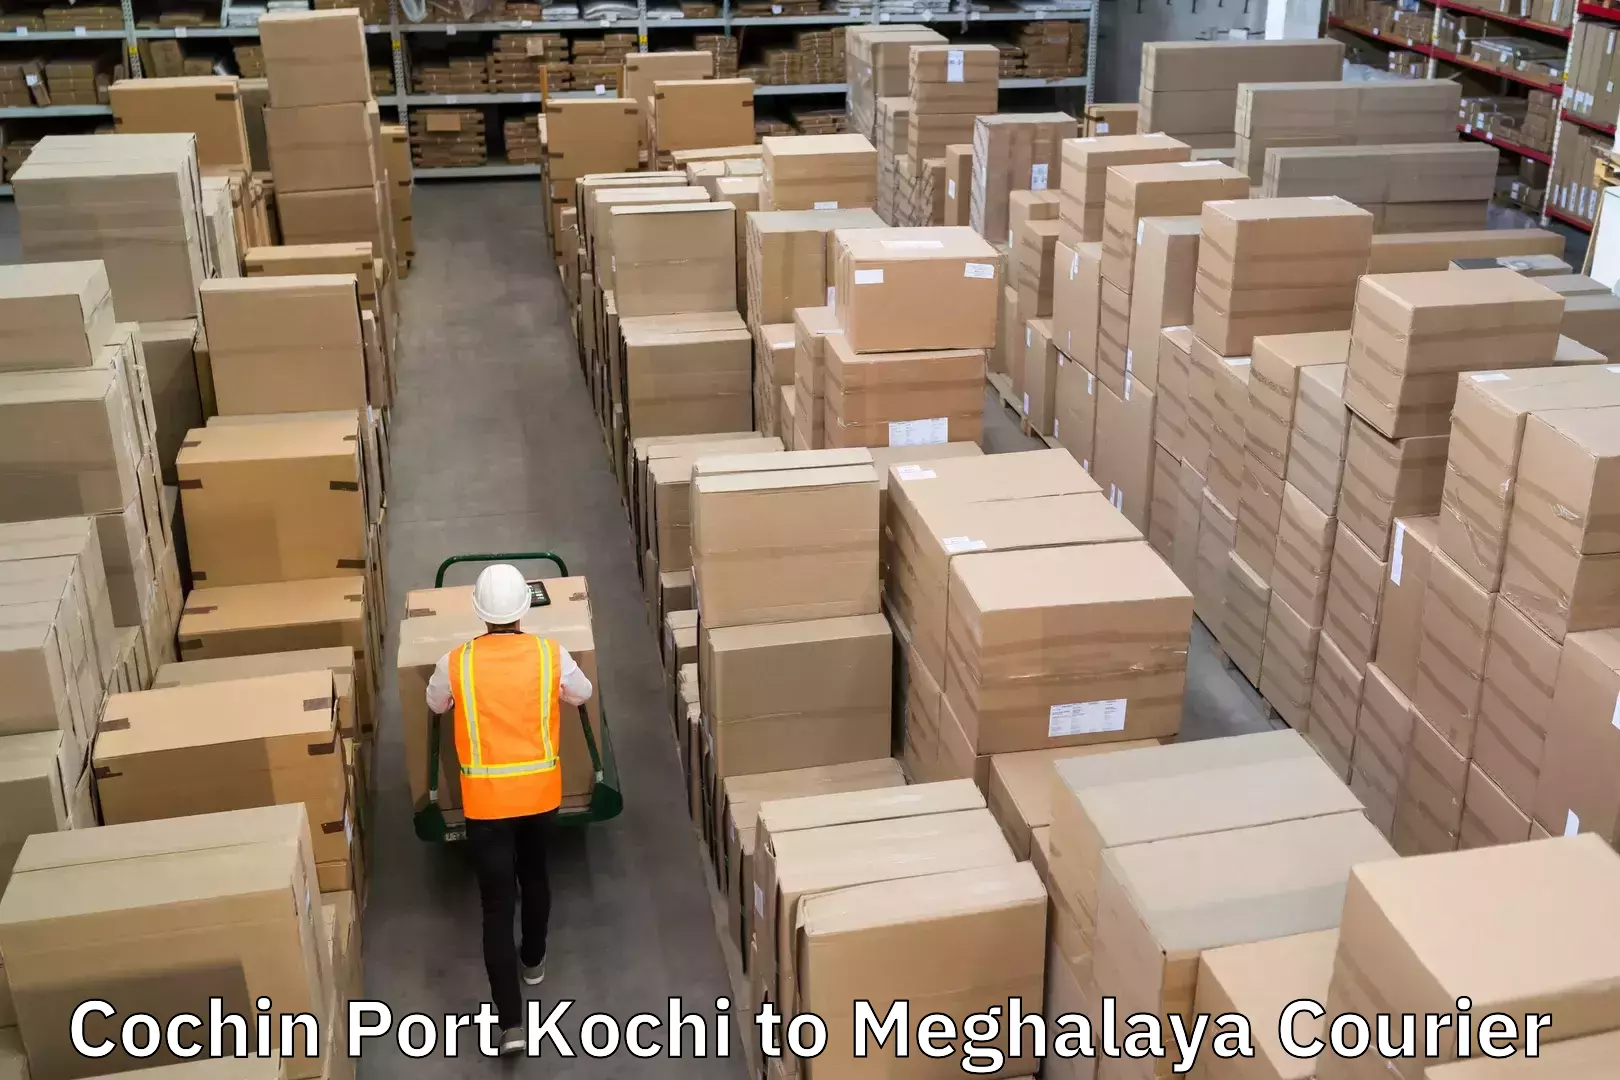 International courier networks Cochin Port Kochi to Meghalaya